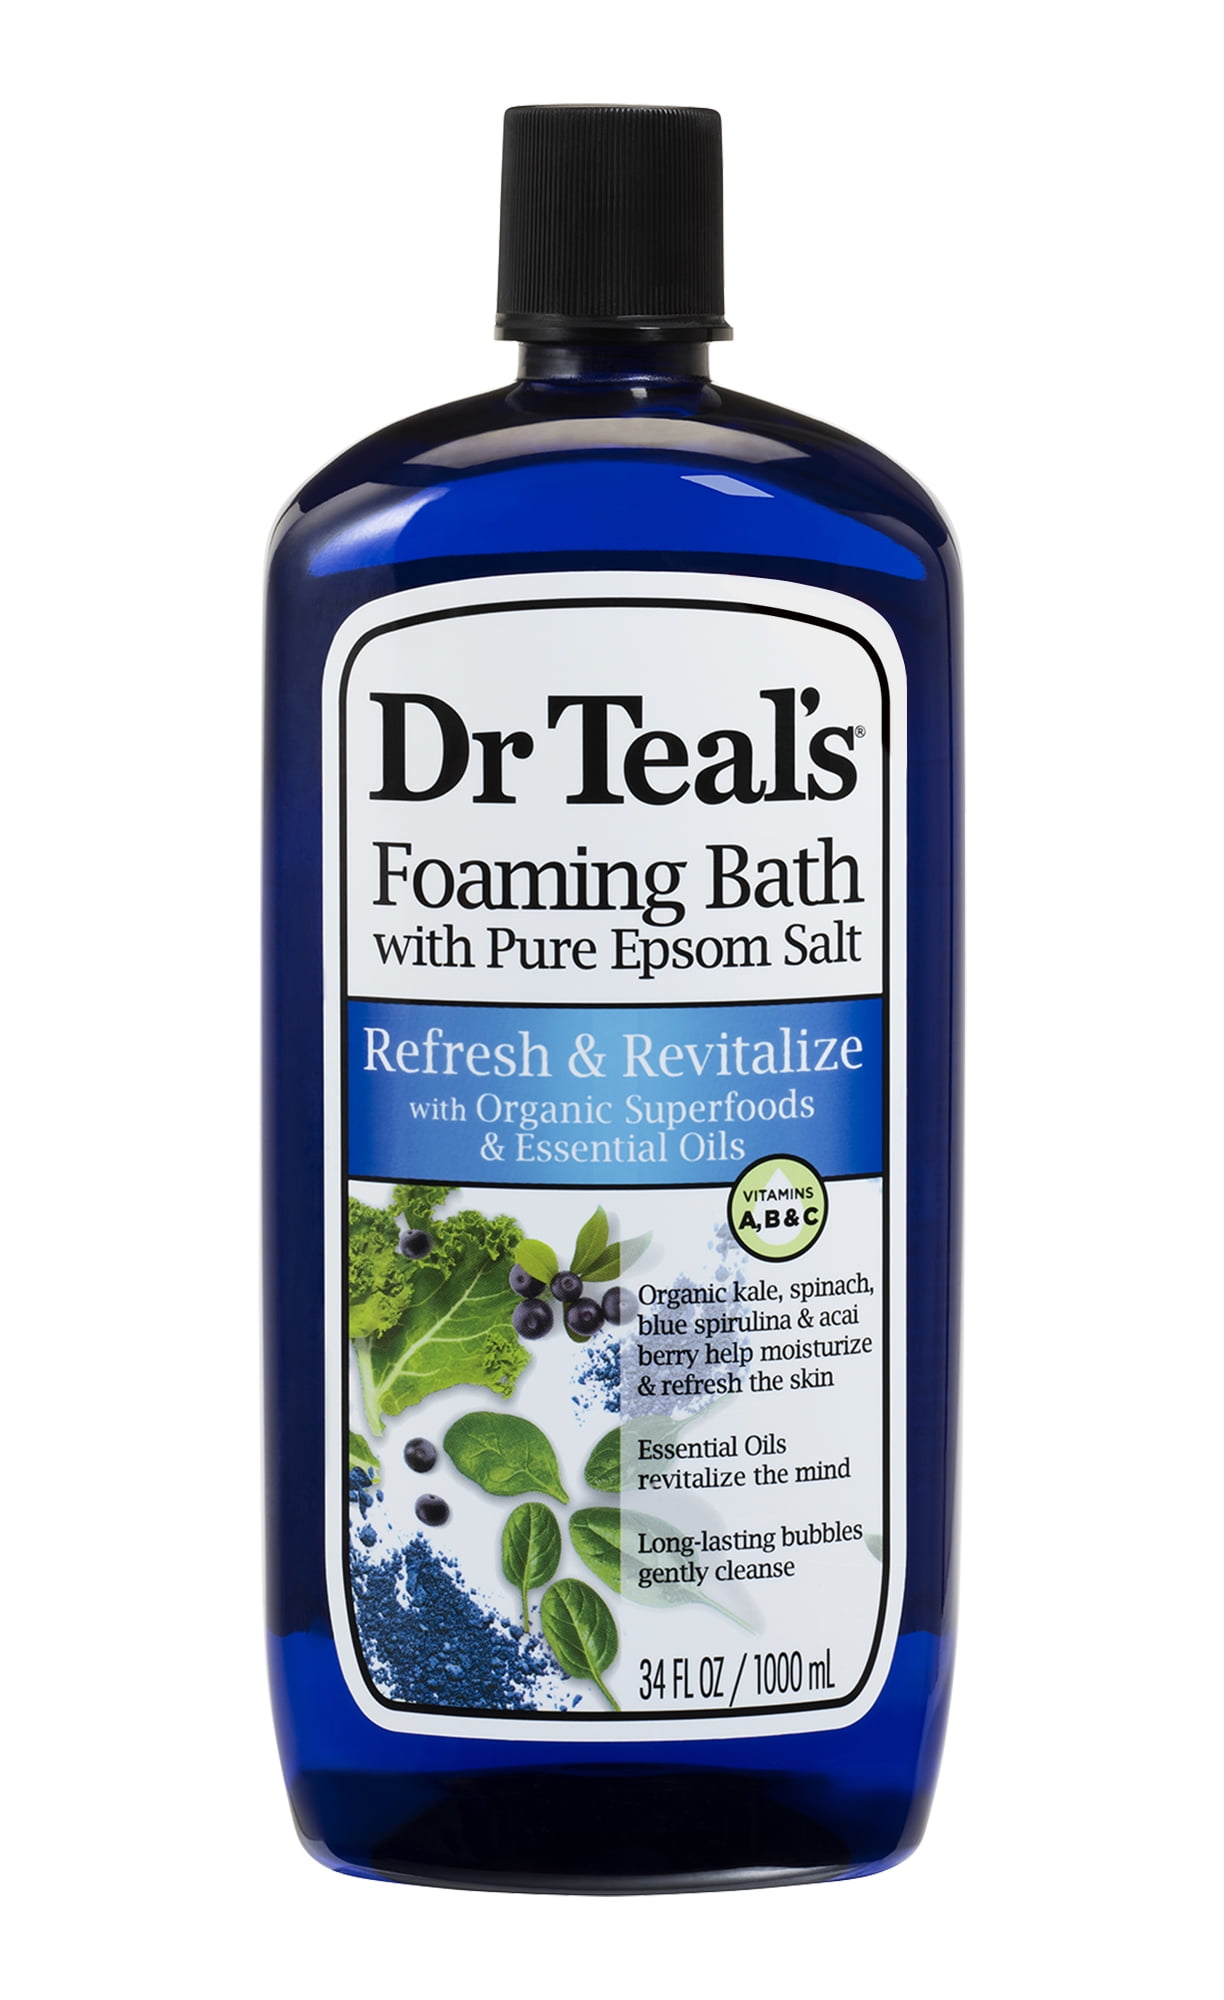 Dr Teal's Refresh & Revitalize Foaming Bath with Epsom Salt and Superfood, 34 fl oz